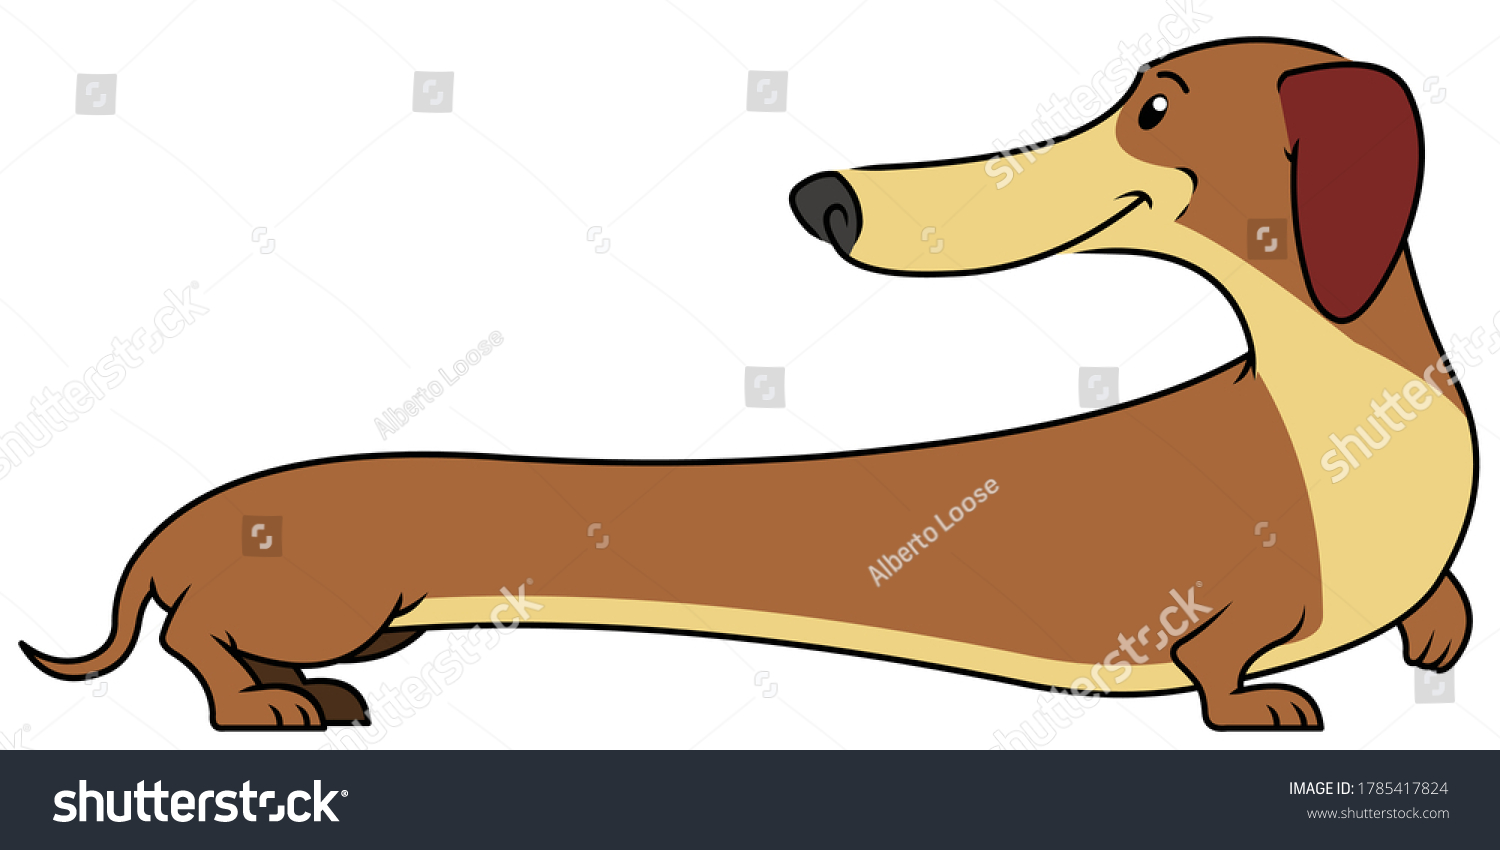 SVG of Dachshund dog, single icon in cartoon style.Dachshund, vector symbol stock illustration web. svg